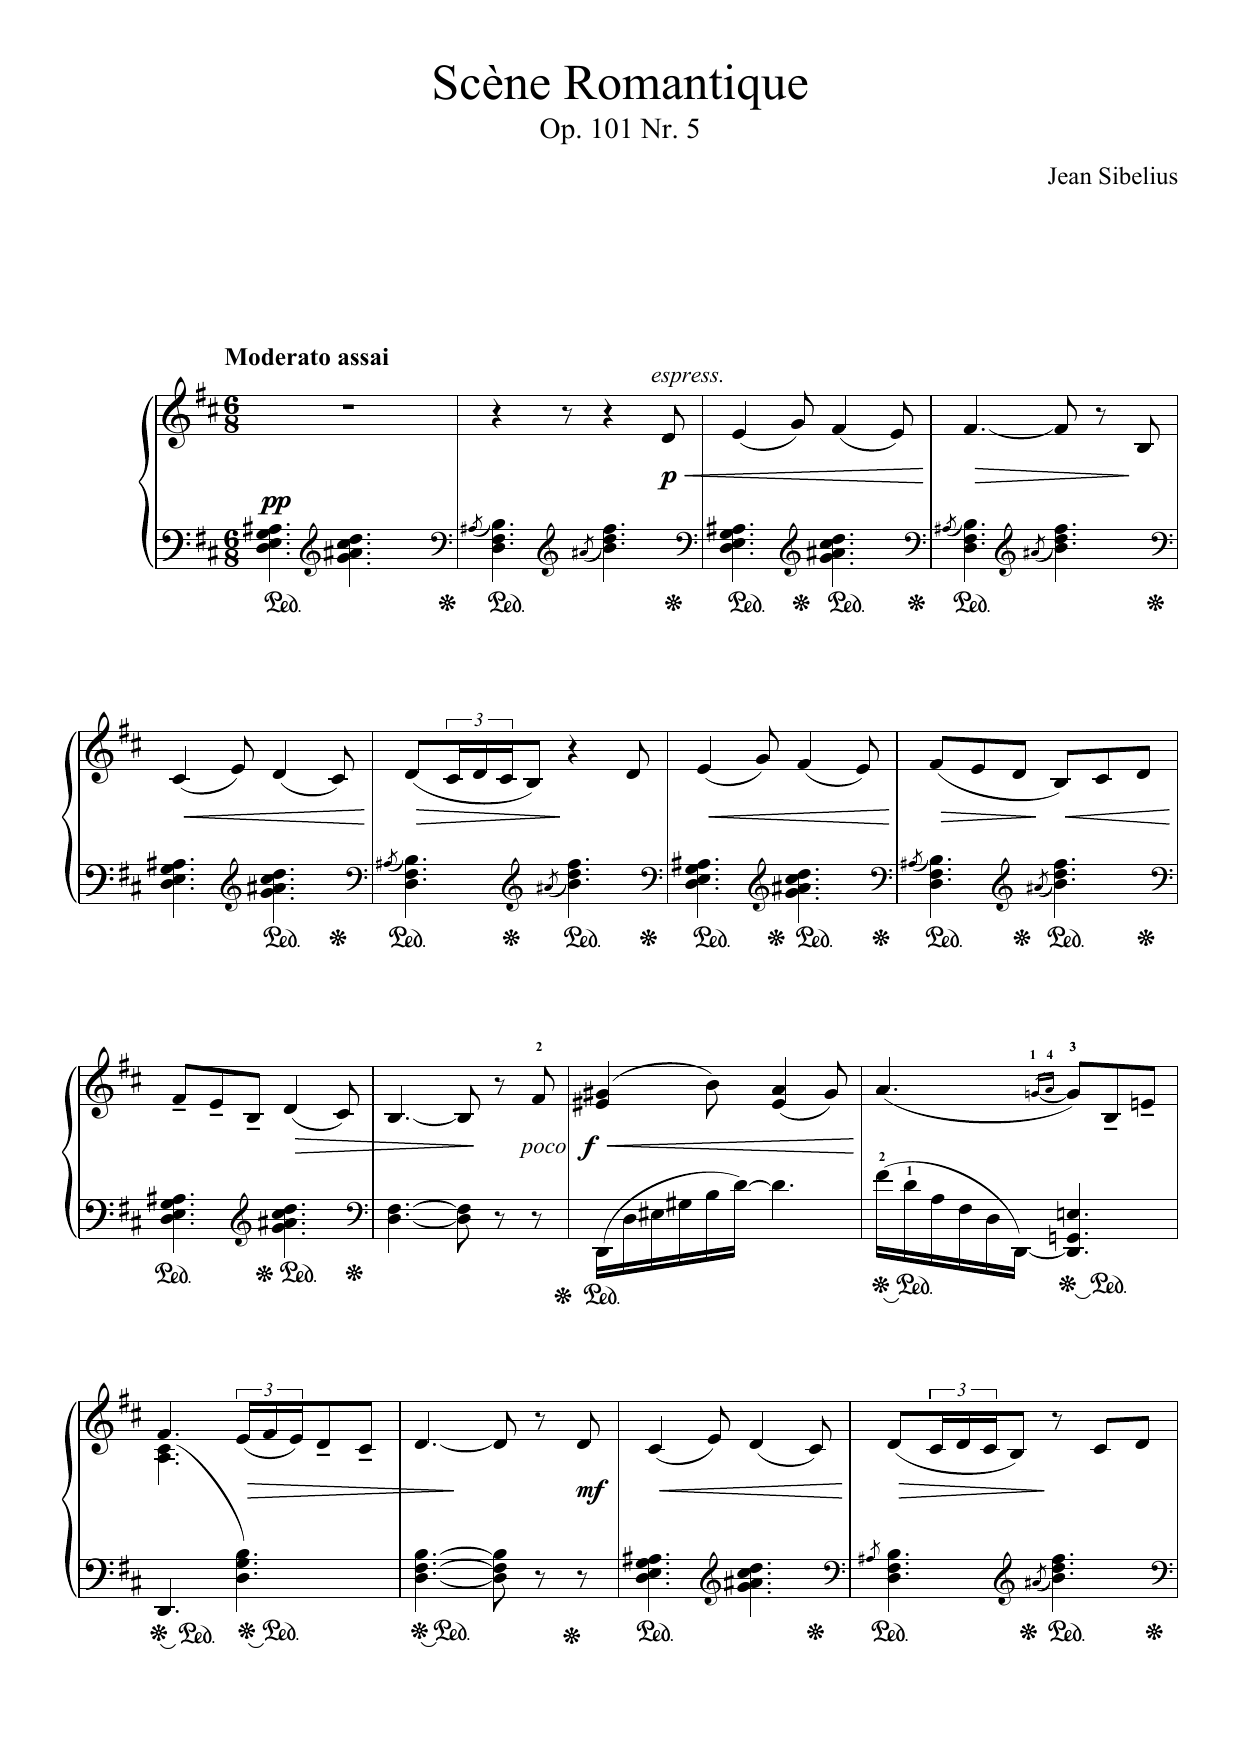 Jean Sibelius 5 Morceaux Romantiques, Op.101 - V. Scene Romantique Sheet Music Notes & Chords for Piano - Download or Print PDF